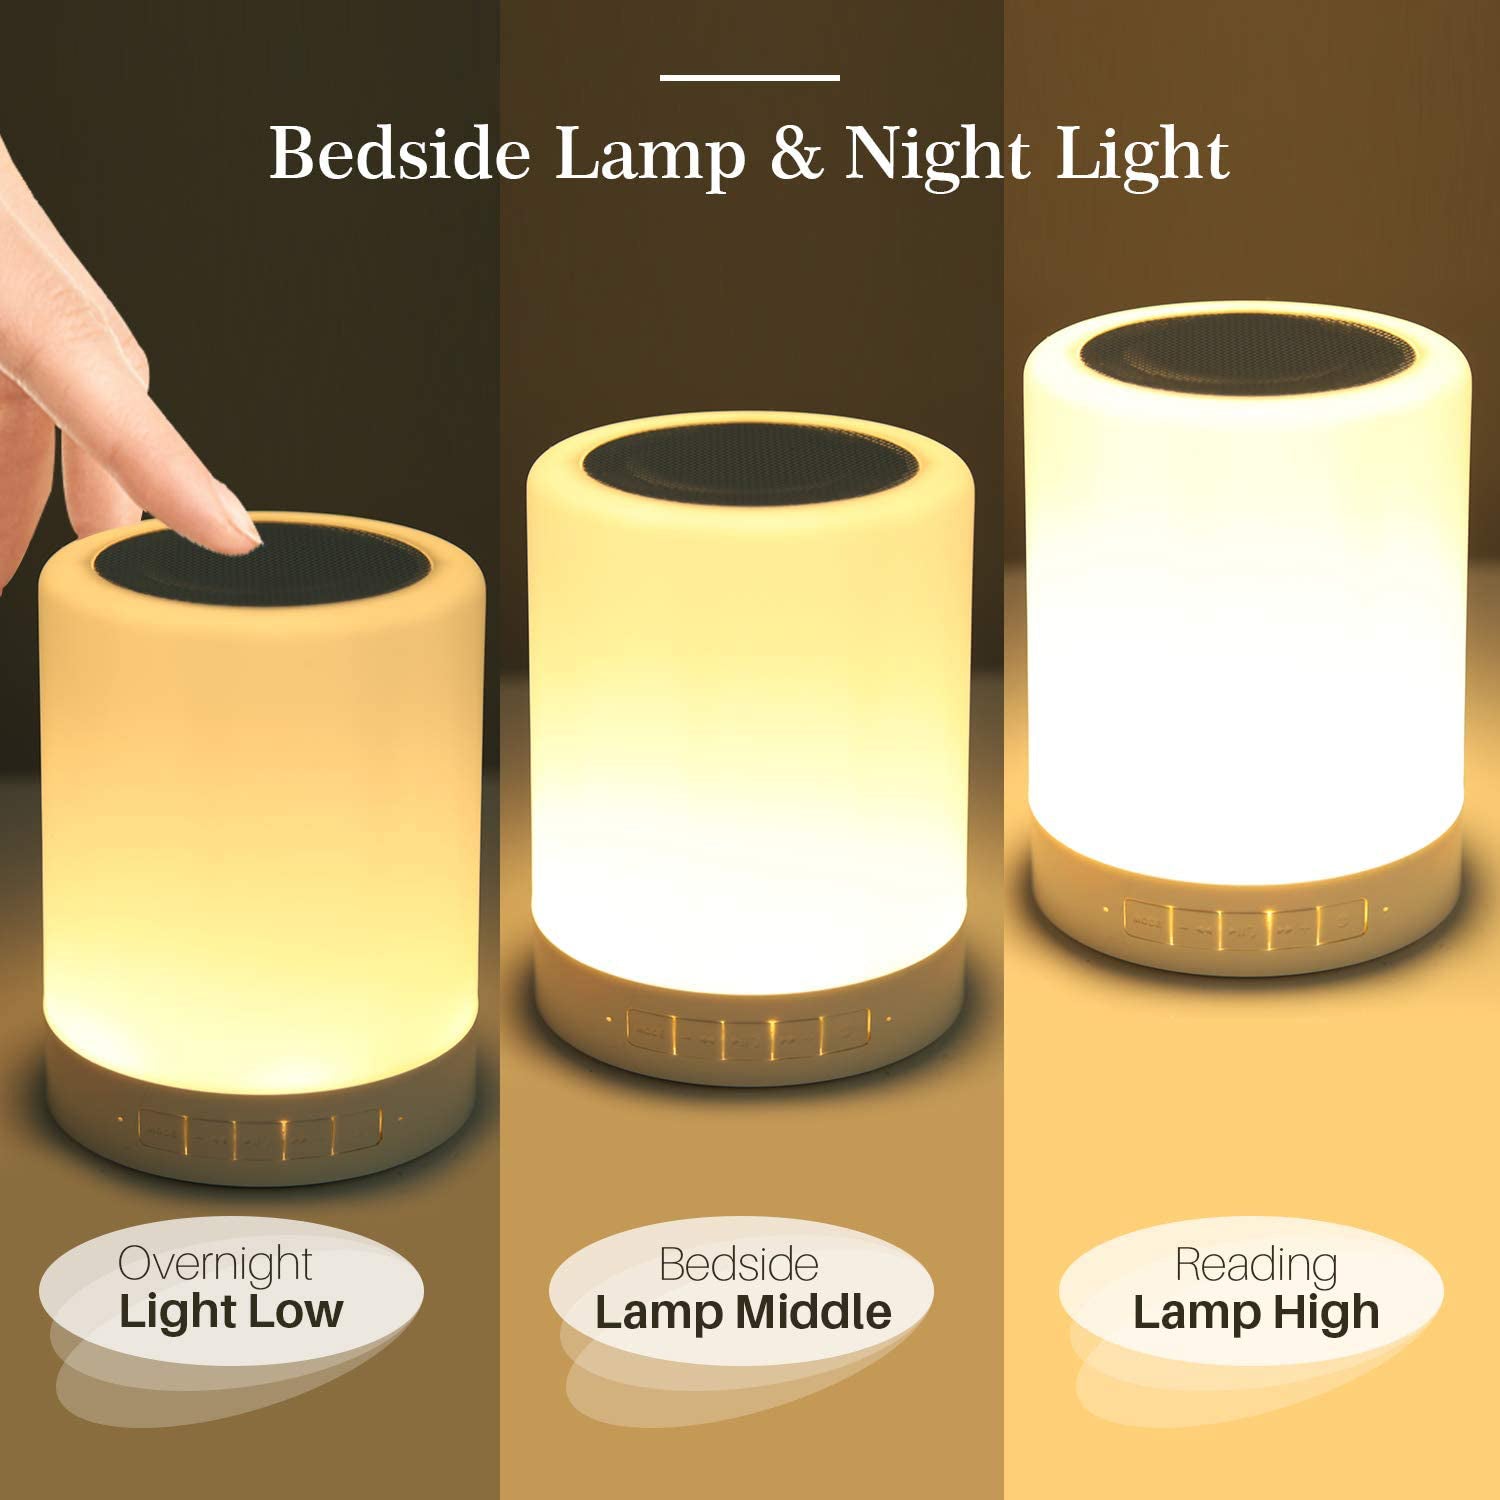 6249 Wireless Night Light LED Touch Lamp Speaker DeoDap